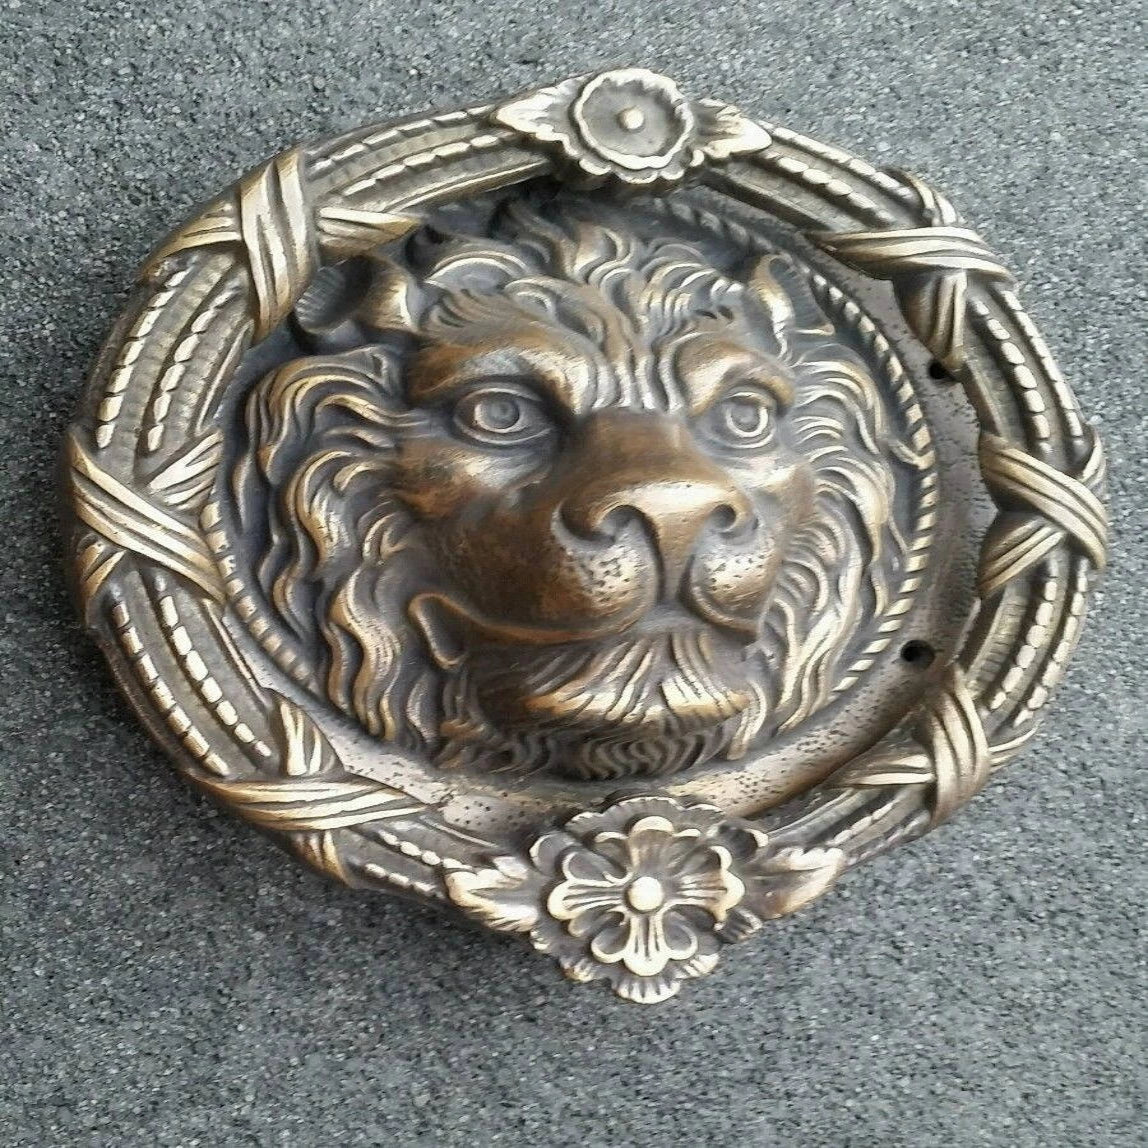 Unique,hand made,Large Solid Brass, Impressive, Lion Head Door Knocker 8" dia. weighs 4lb 14oz#D3